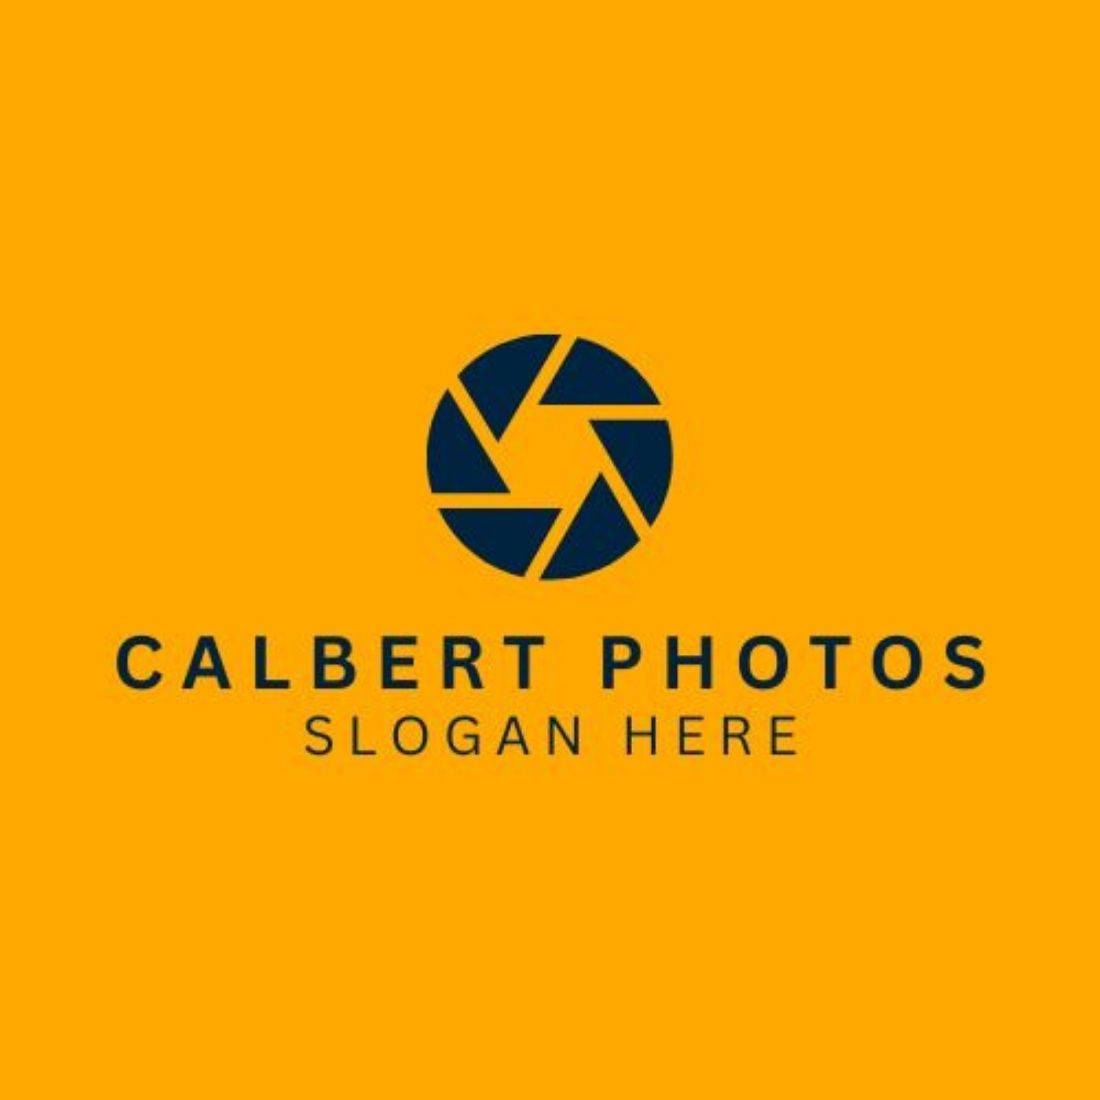 Editable Photography & Camera Service Logos cover image.